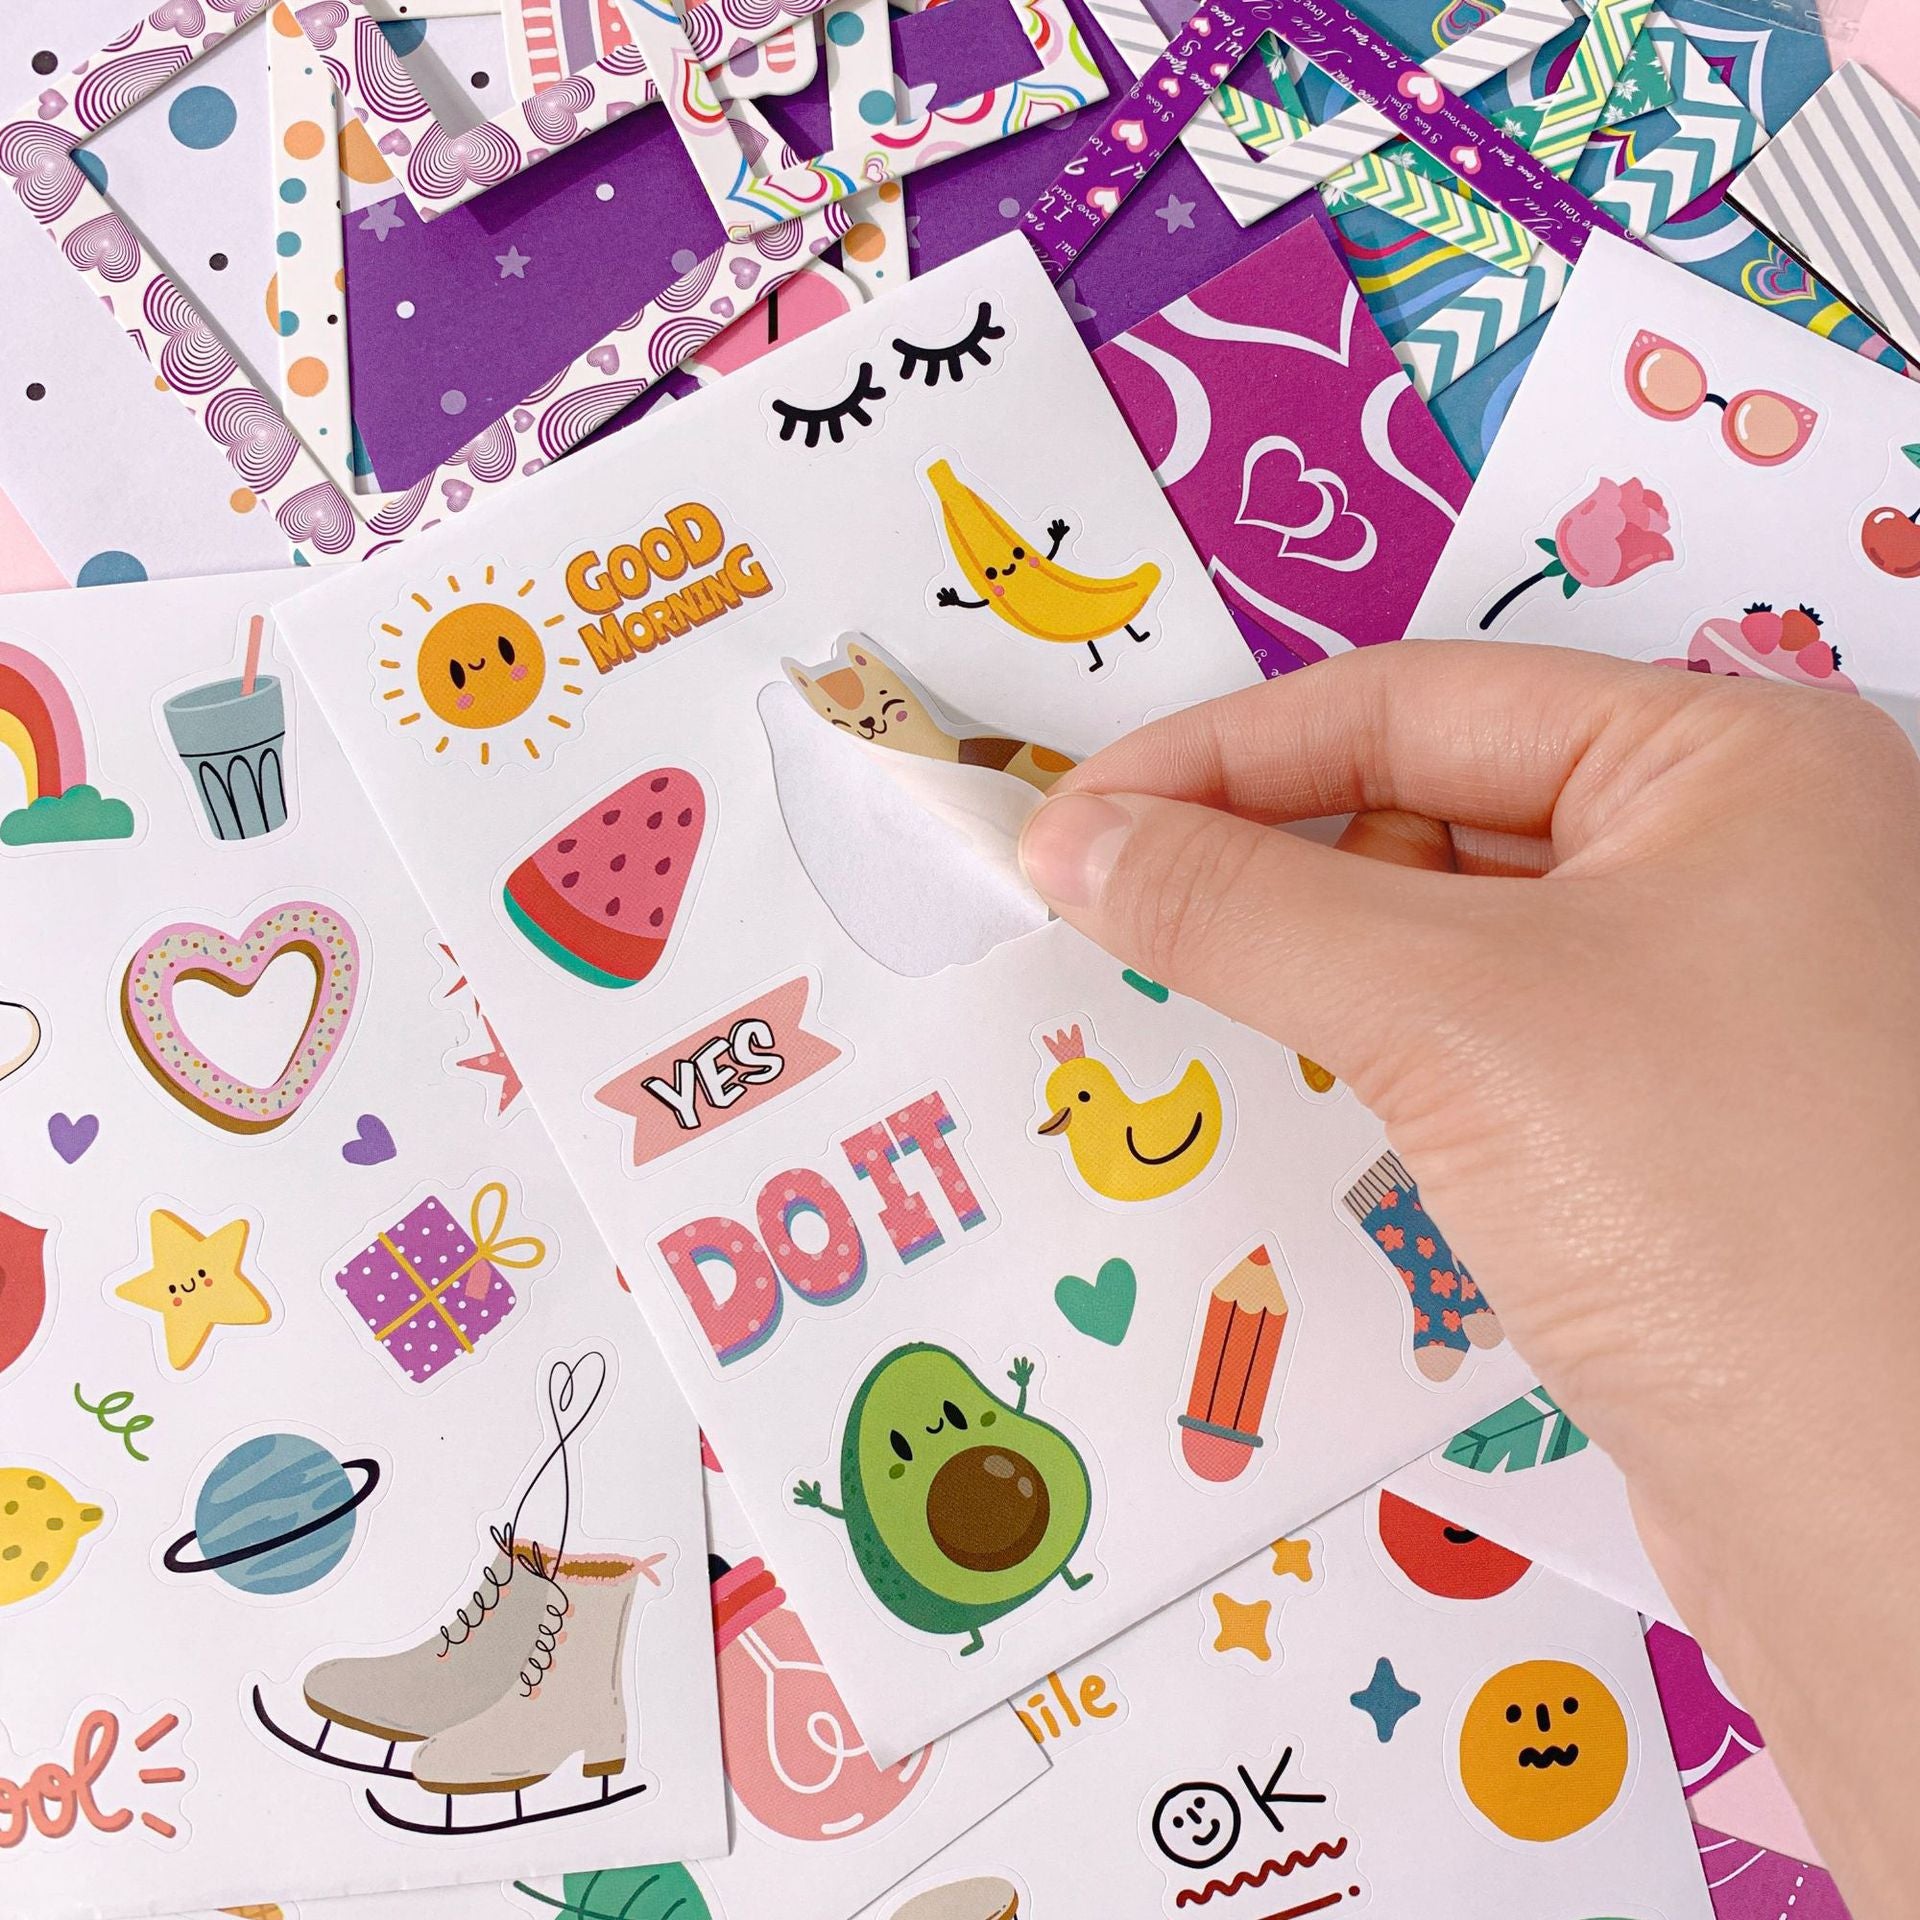 DIY Journal Kit for Girls 8-12 Purple Scrapbook Diary Supplies Set